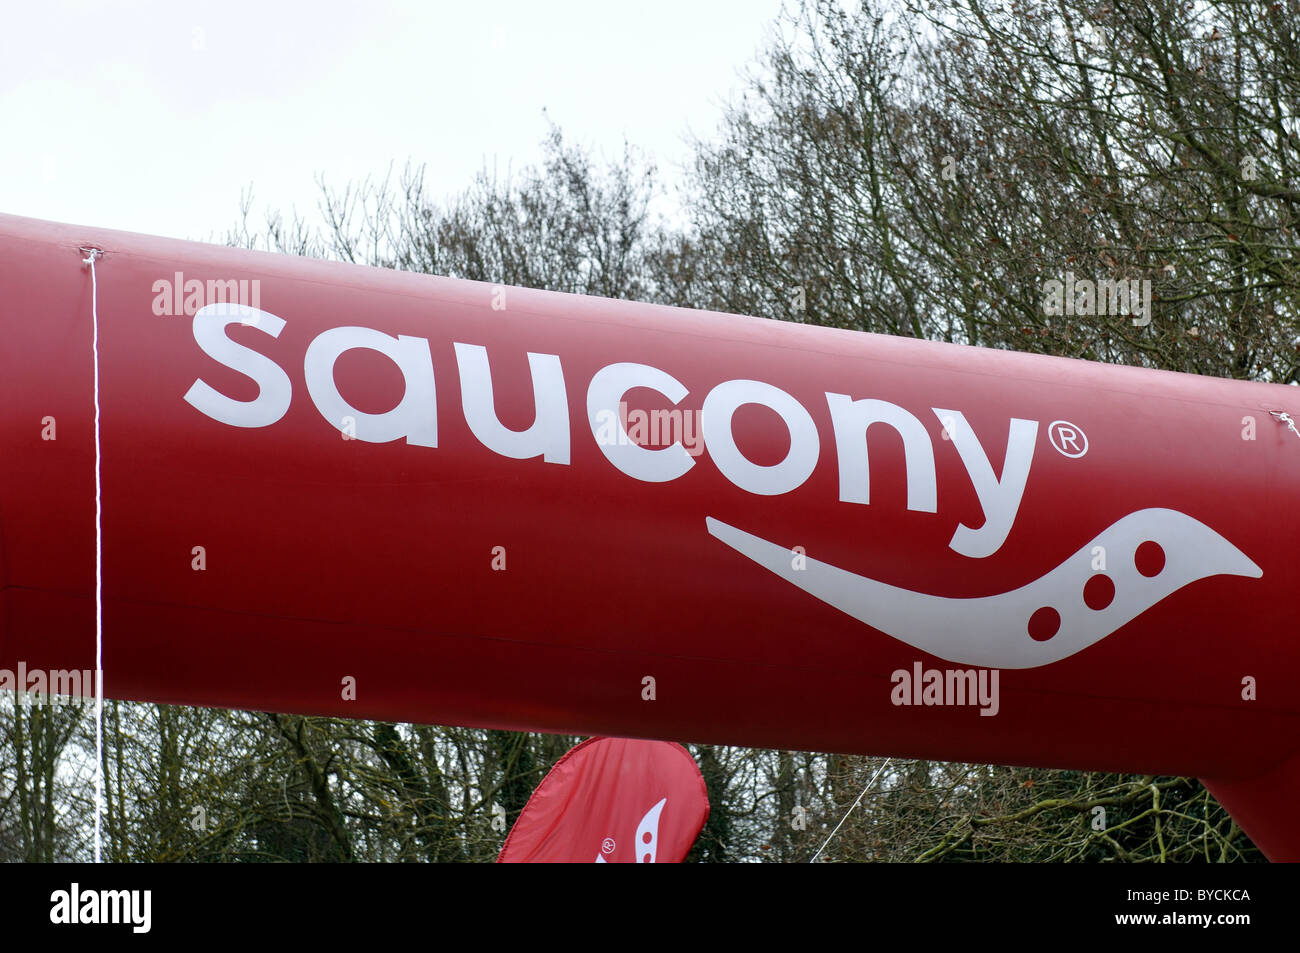 Inflatable race finishing gantry with Saucony logo on Stock Photo - Alamy